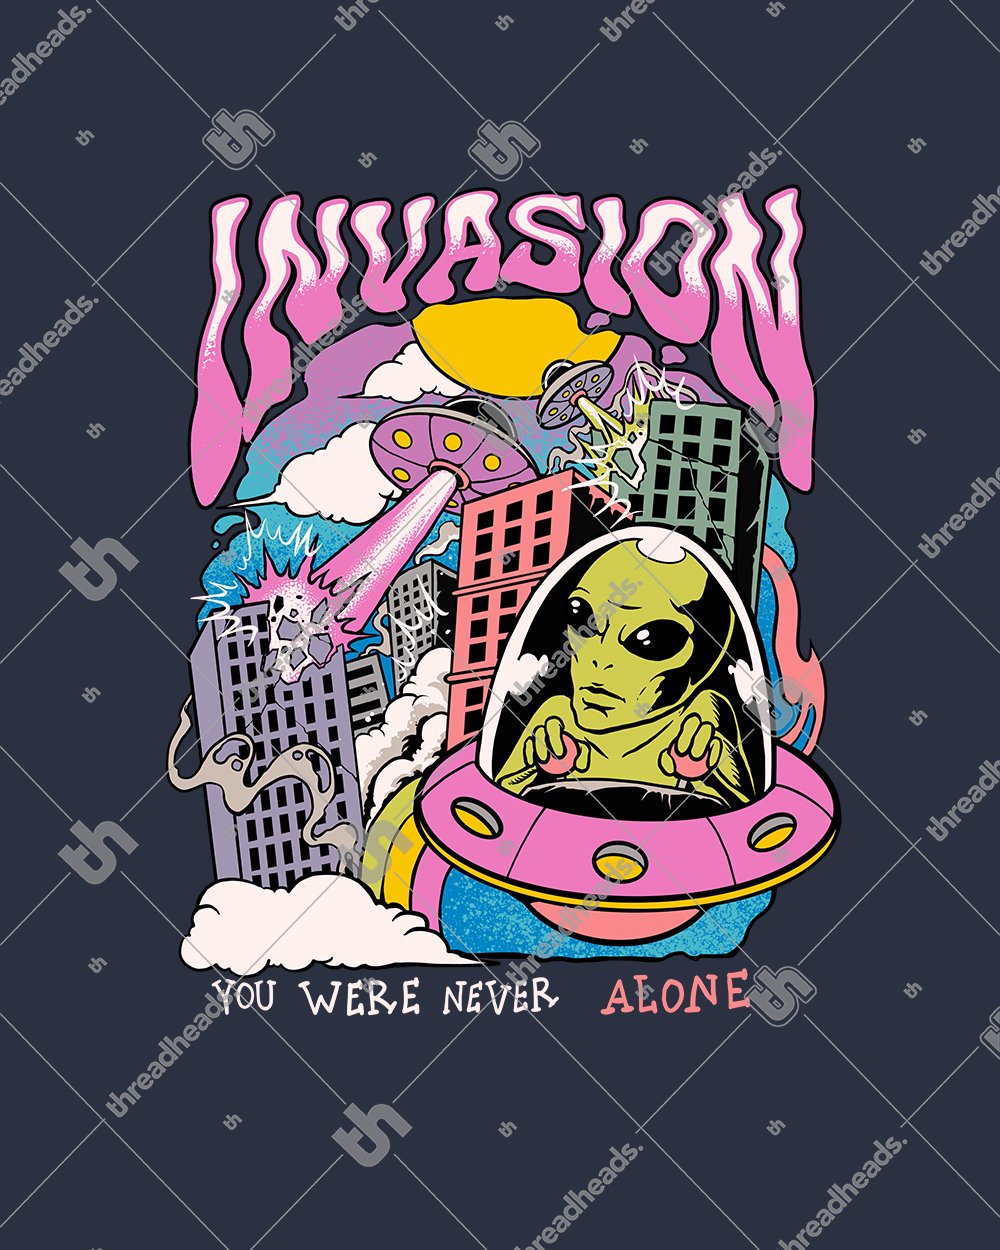 Invasion Sweater Australia Online #colour_navy